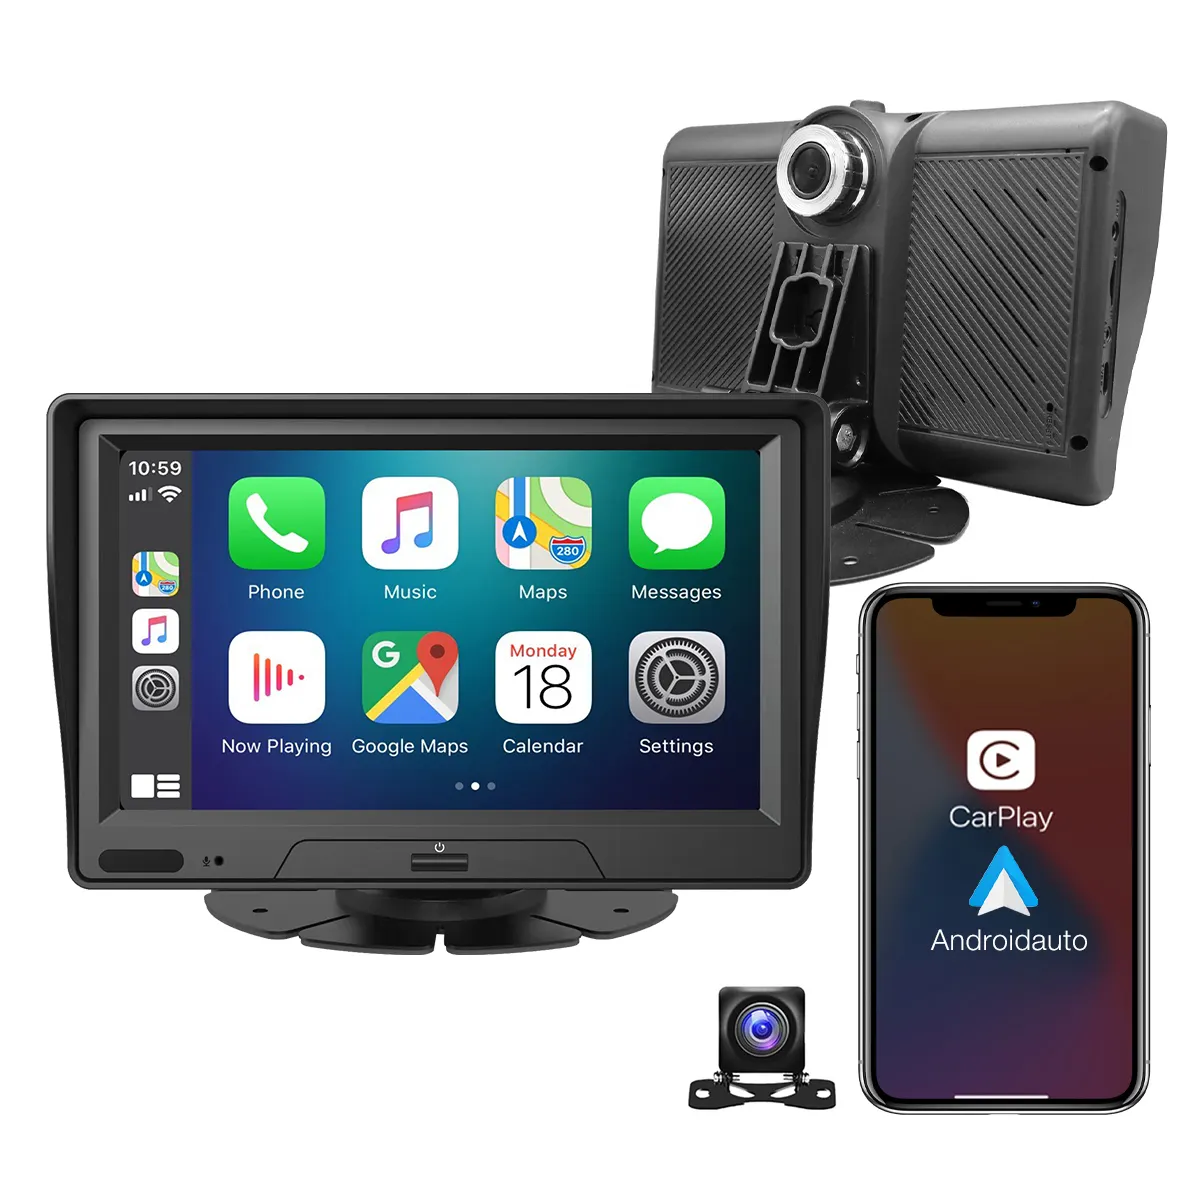 2022 Neues tragbares Carplay Android Auto 7 Zoll Auto GPS Navigation DVR Video recorder HD-Dual-Kameras vorne und hinten BT WIFI FM TMC